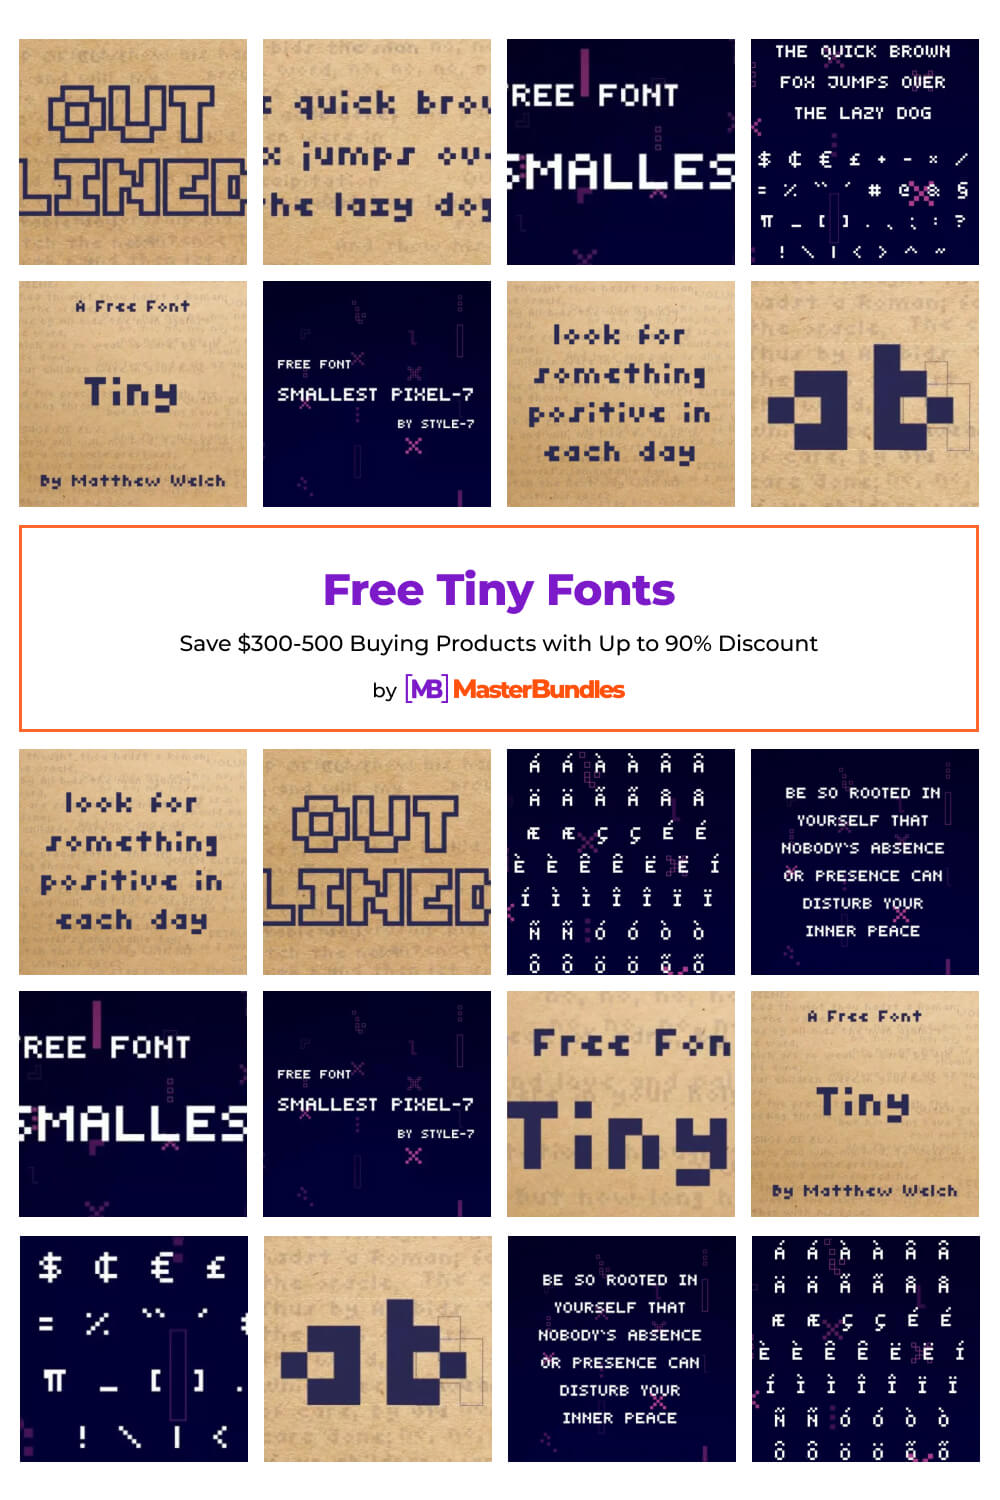 free tiny fonts pinterest image.